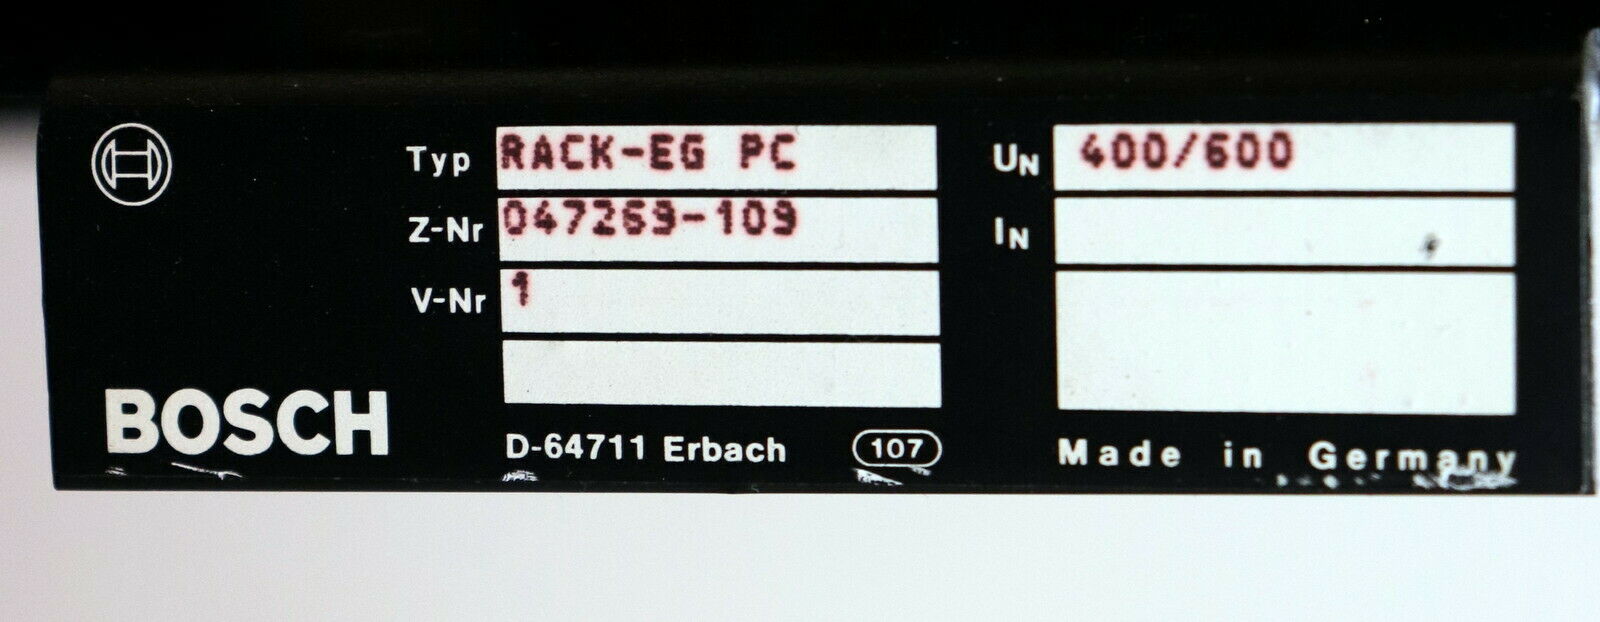 BOSCH RACK-EG PC 047269-109 UN=600/400V + Platine 1070038993-303 ohne Lüfter